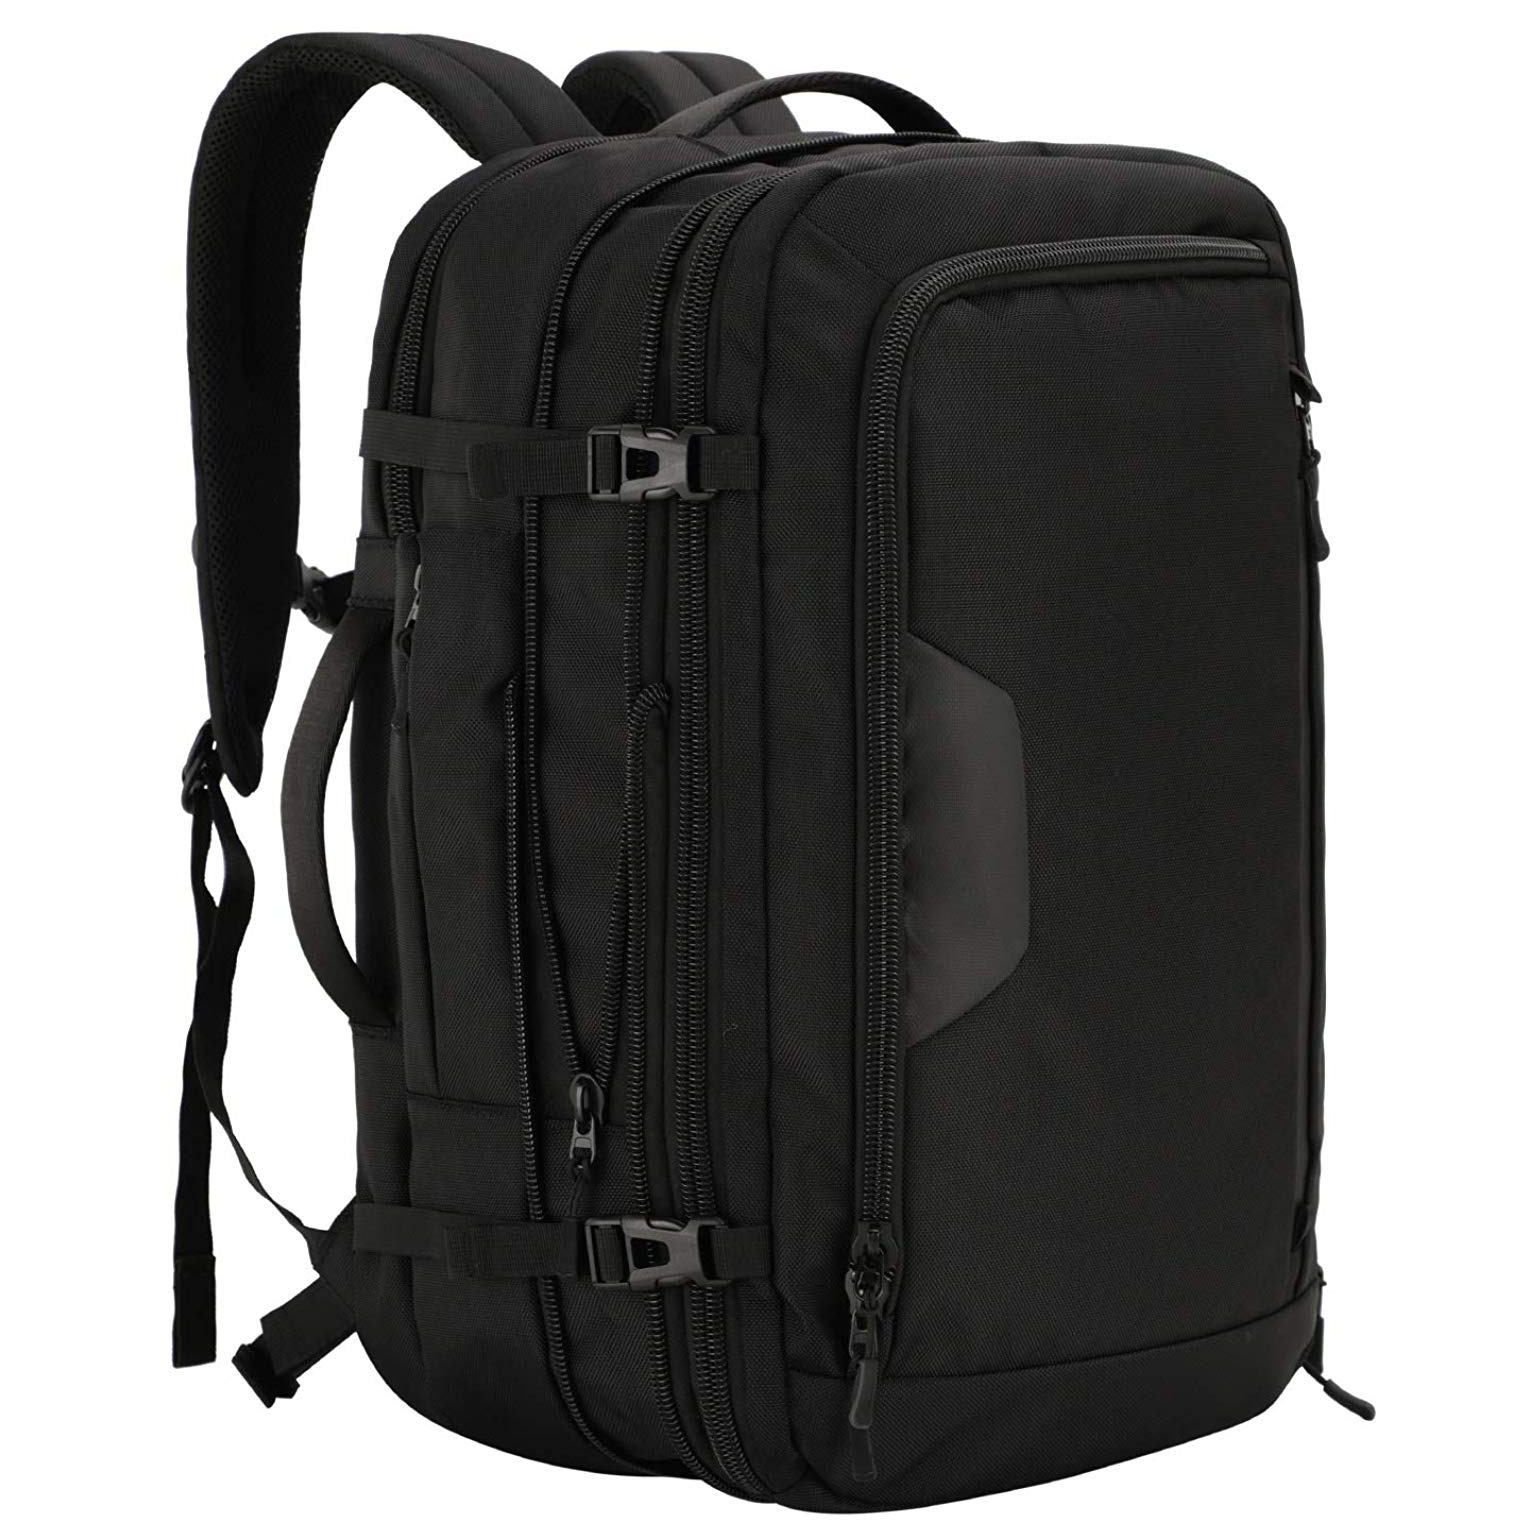 MIER Expandable Travel Backpack Waterproof Carry-on Weekender Bag